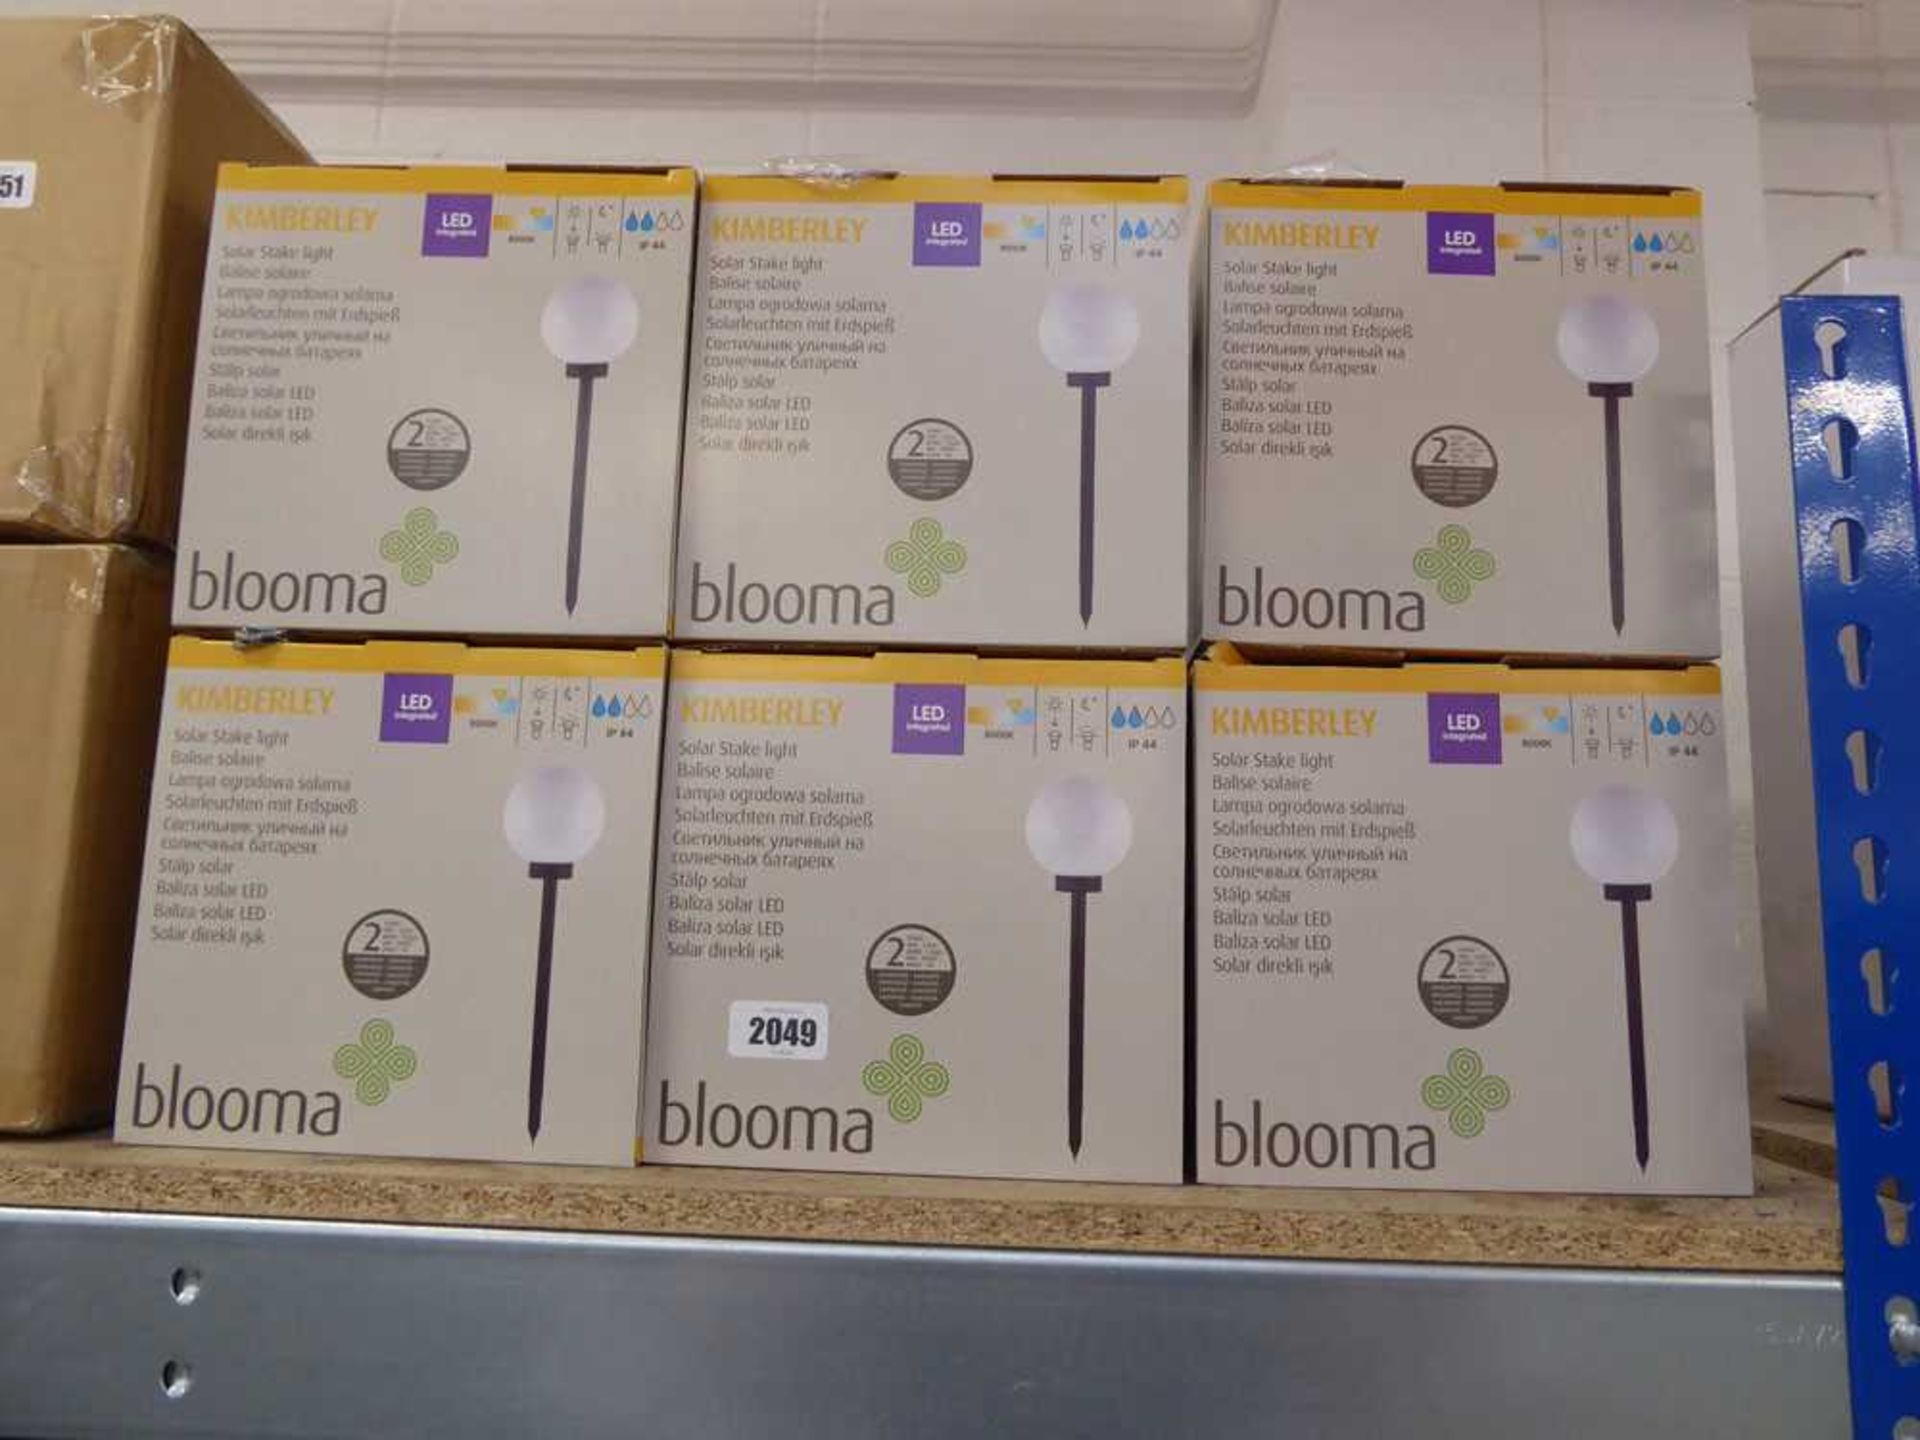 6 boxed Blooma Kimberley solar stake lights